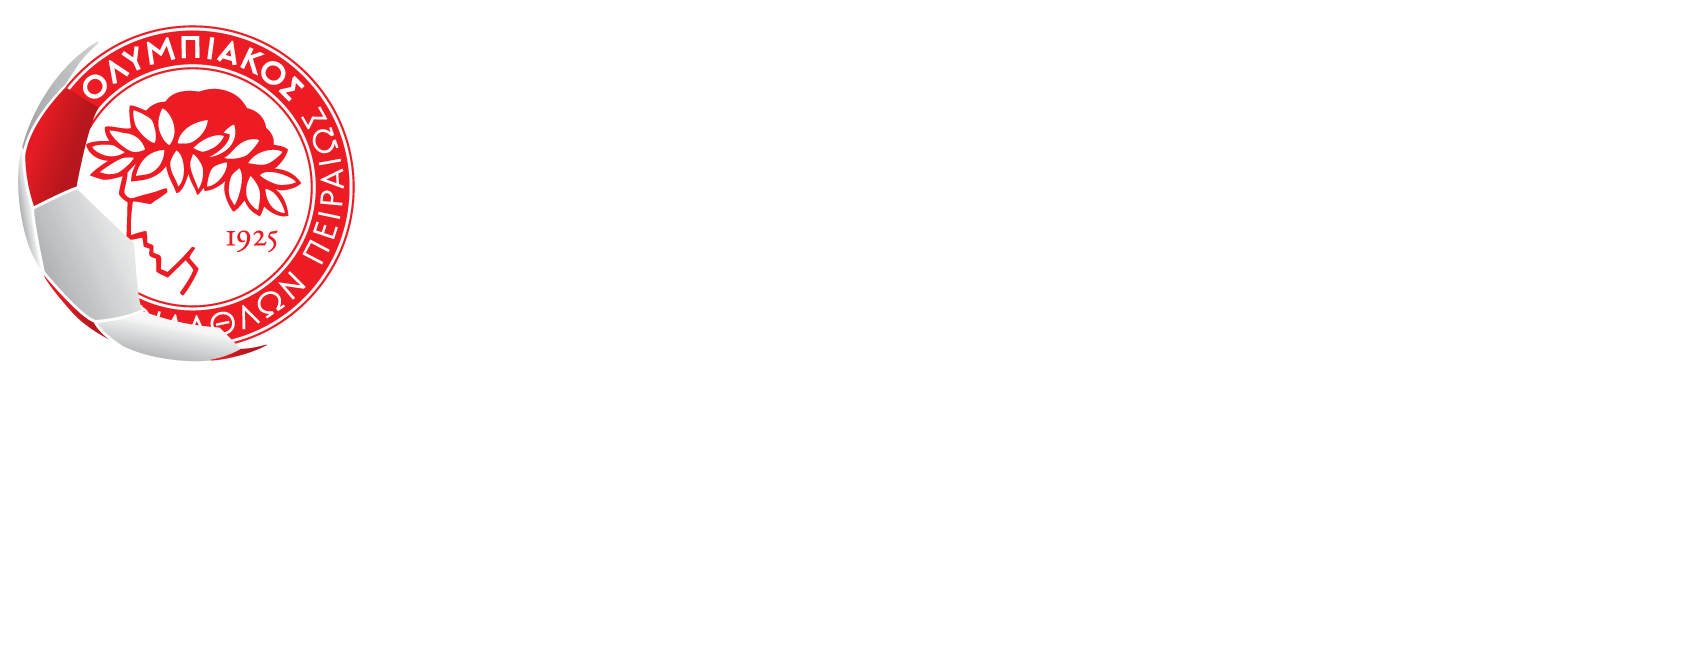 Olympiacos Saturday Talent ID Schools Logo